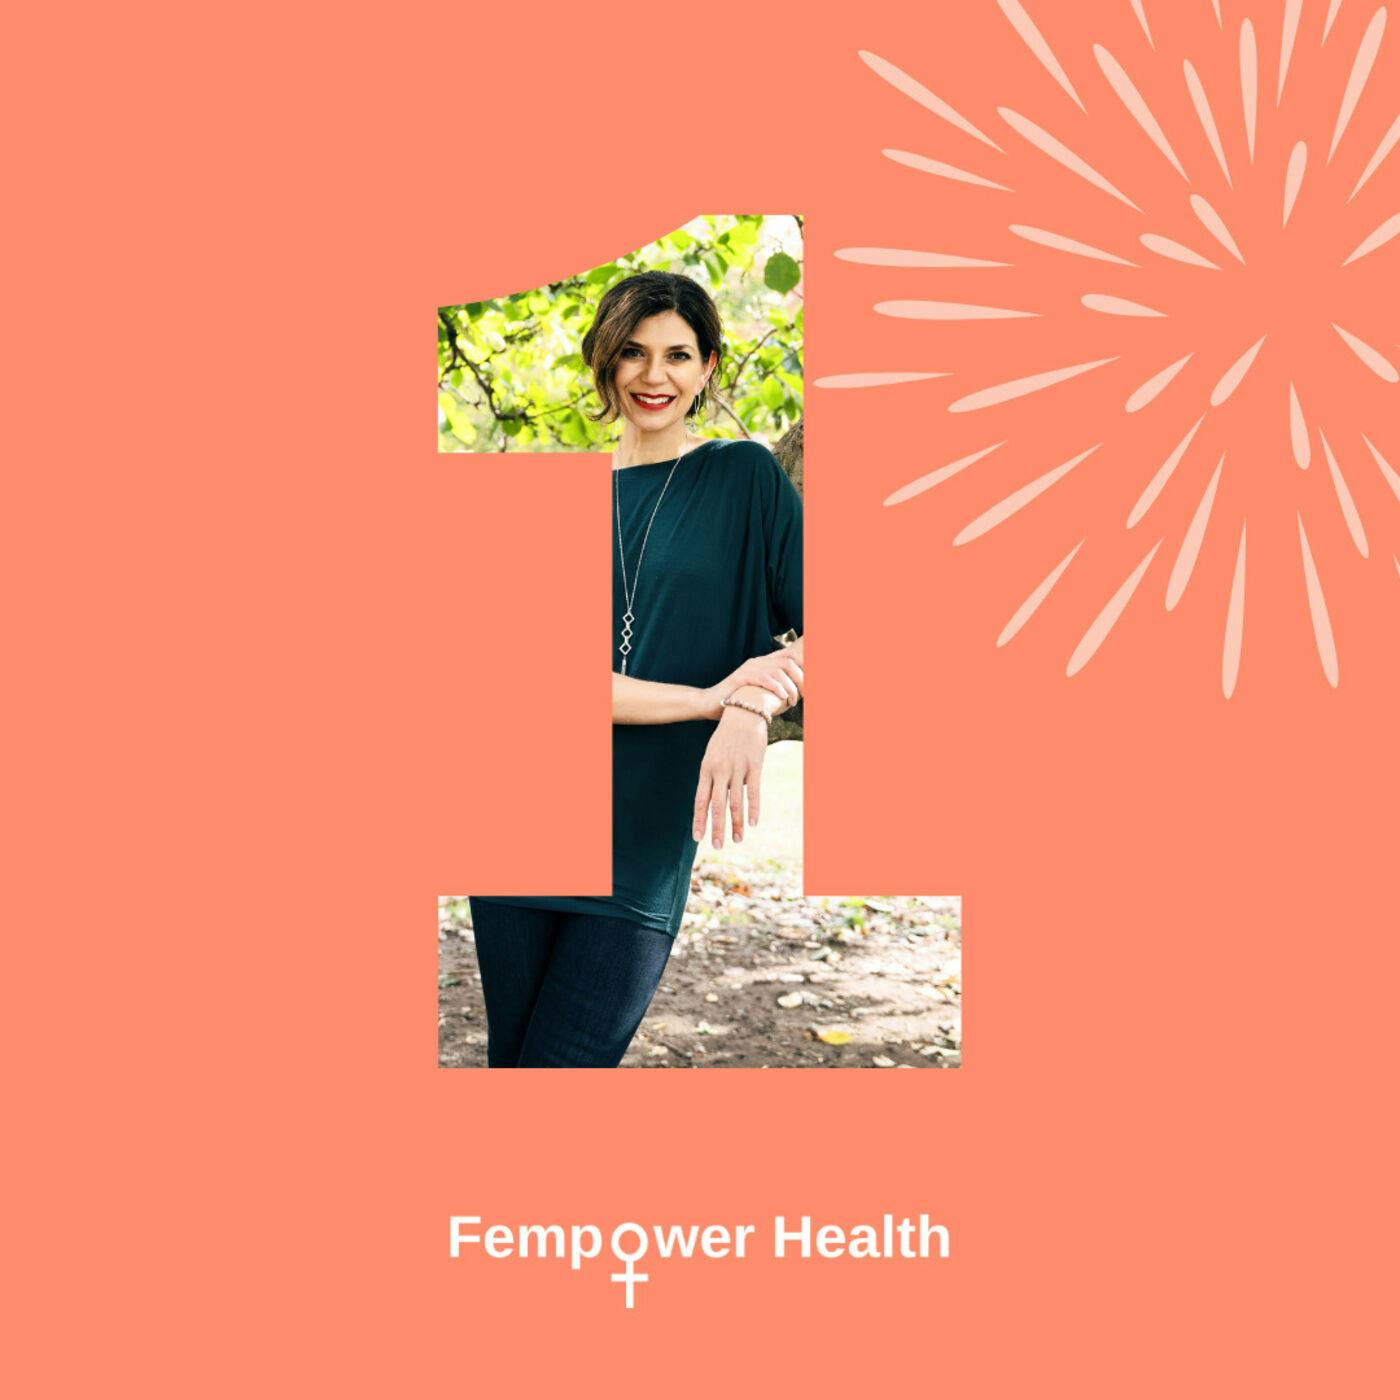 Happy 1st Anniversary Fempower Health: Outtakes